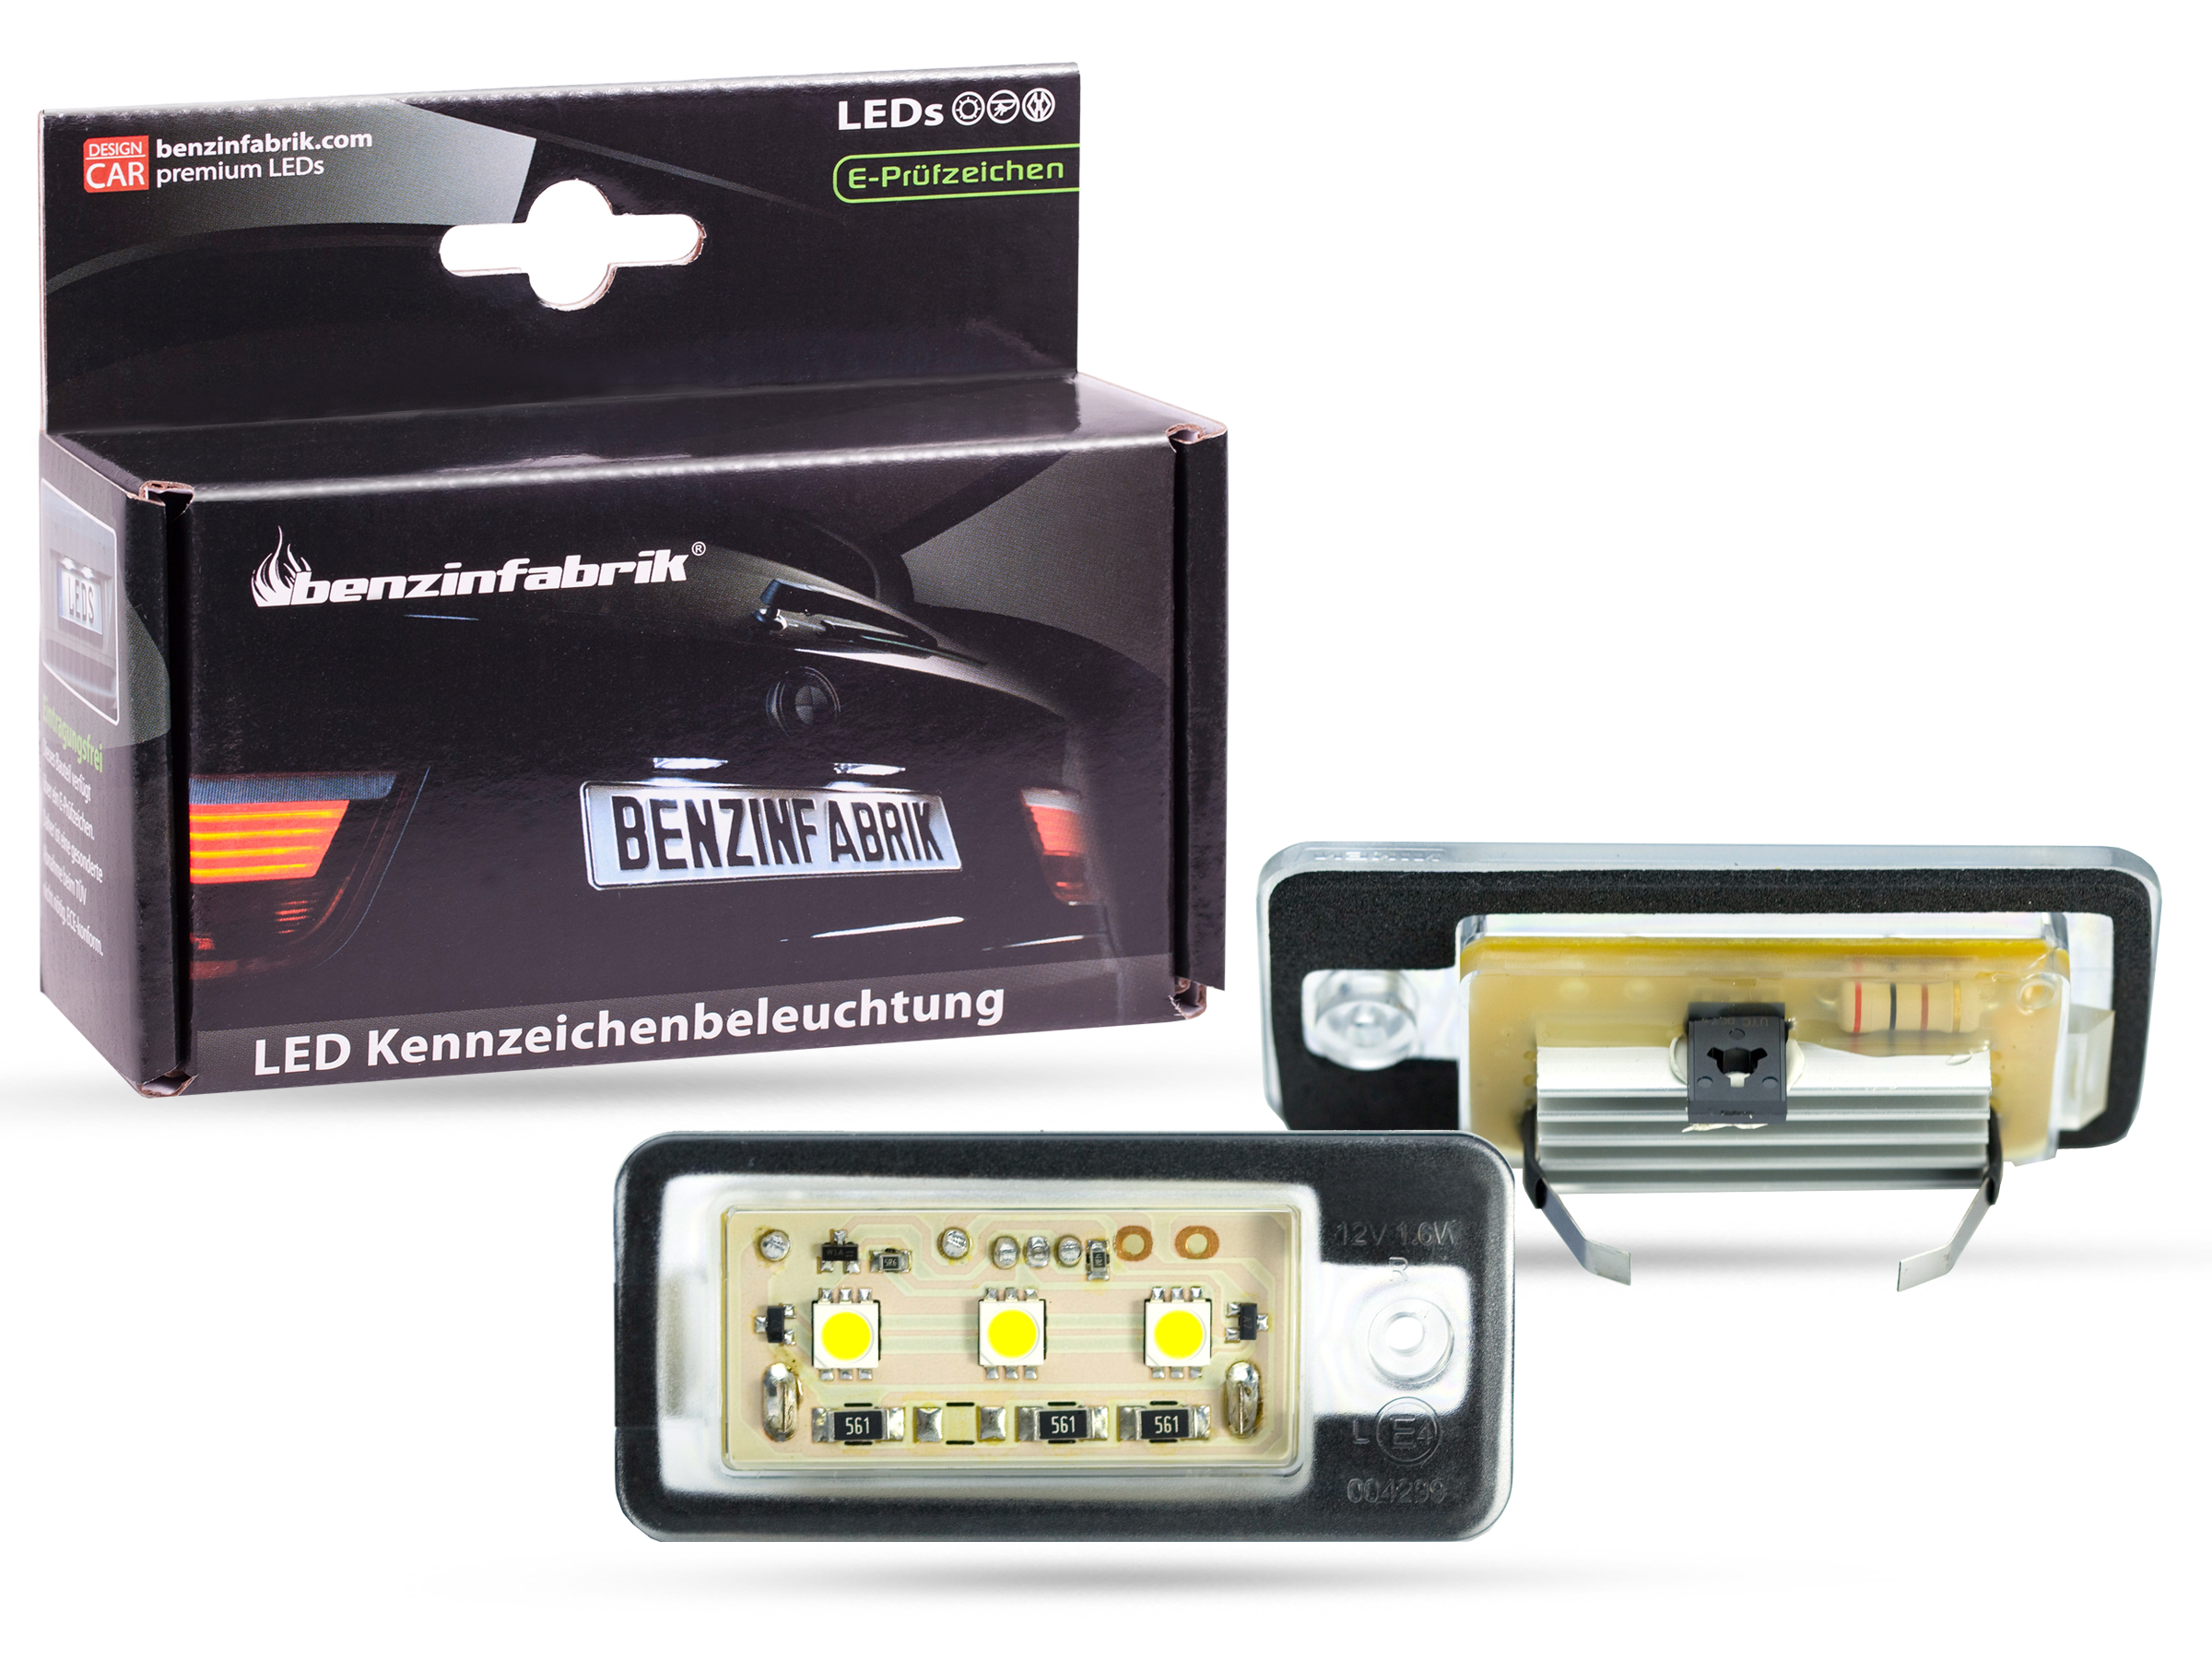 LED Kennzeichenbeleuchtung Module Audi A4 B7 Bj. 04-08, Lim., Avant,  Cabrio, mit E-Prüfzeichen, LED Kennzeichenbeleuchtung für Audi, LED  Kennzeichenbeleuchtung